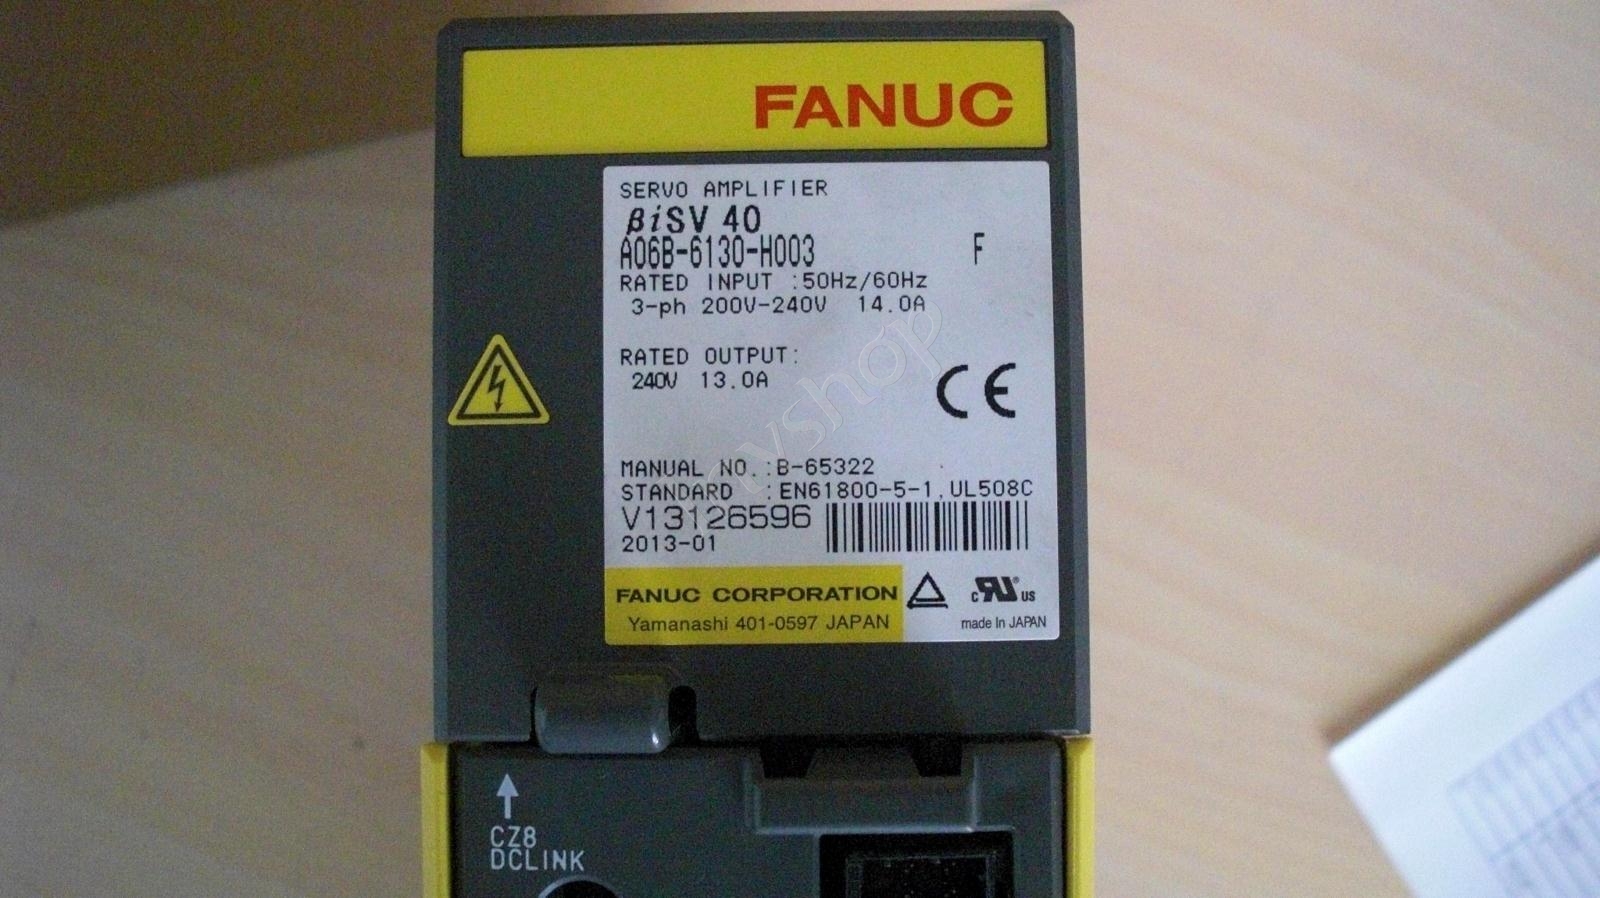 FANUC A06B-6130-H003 servo amplifier